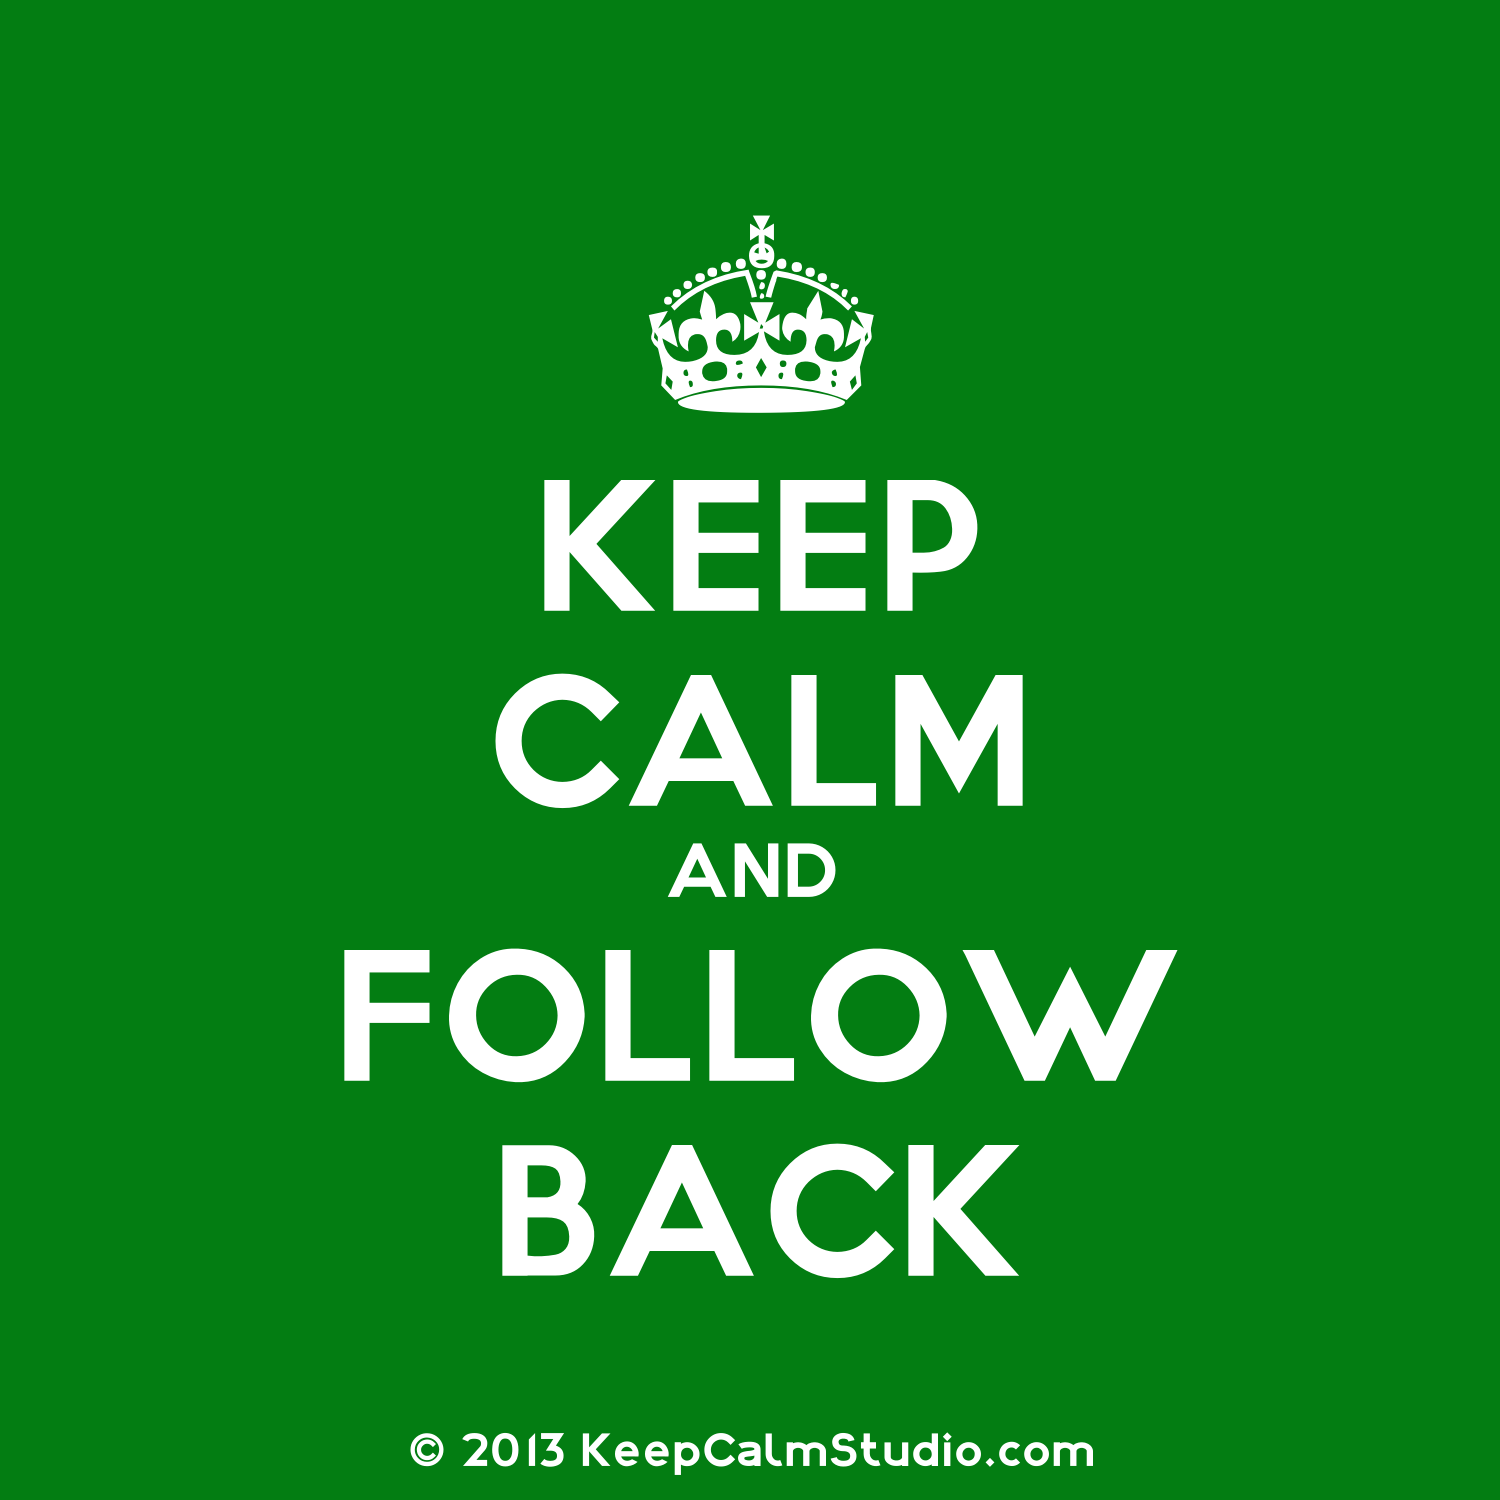 Keep calm and follow back.